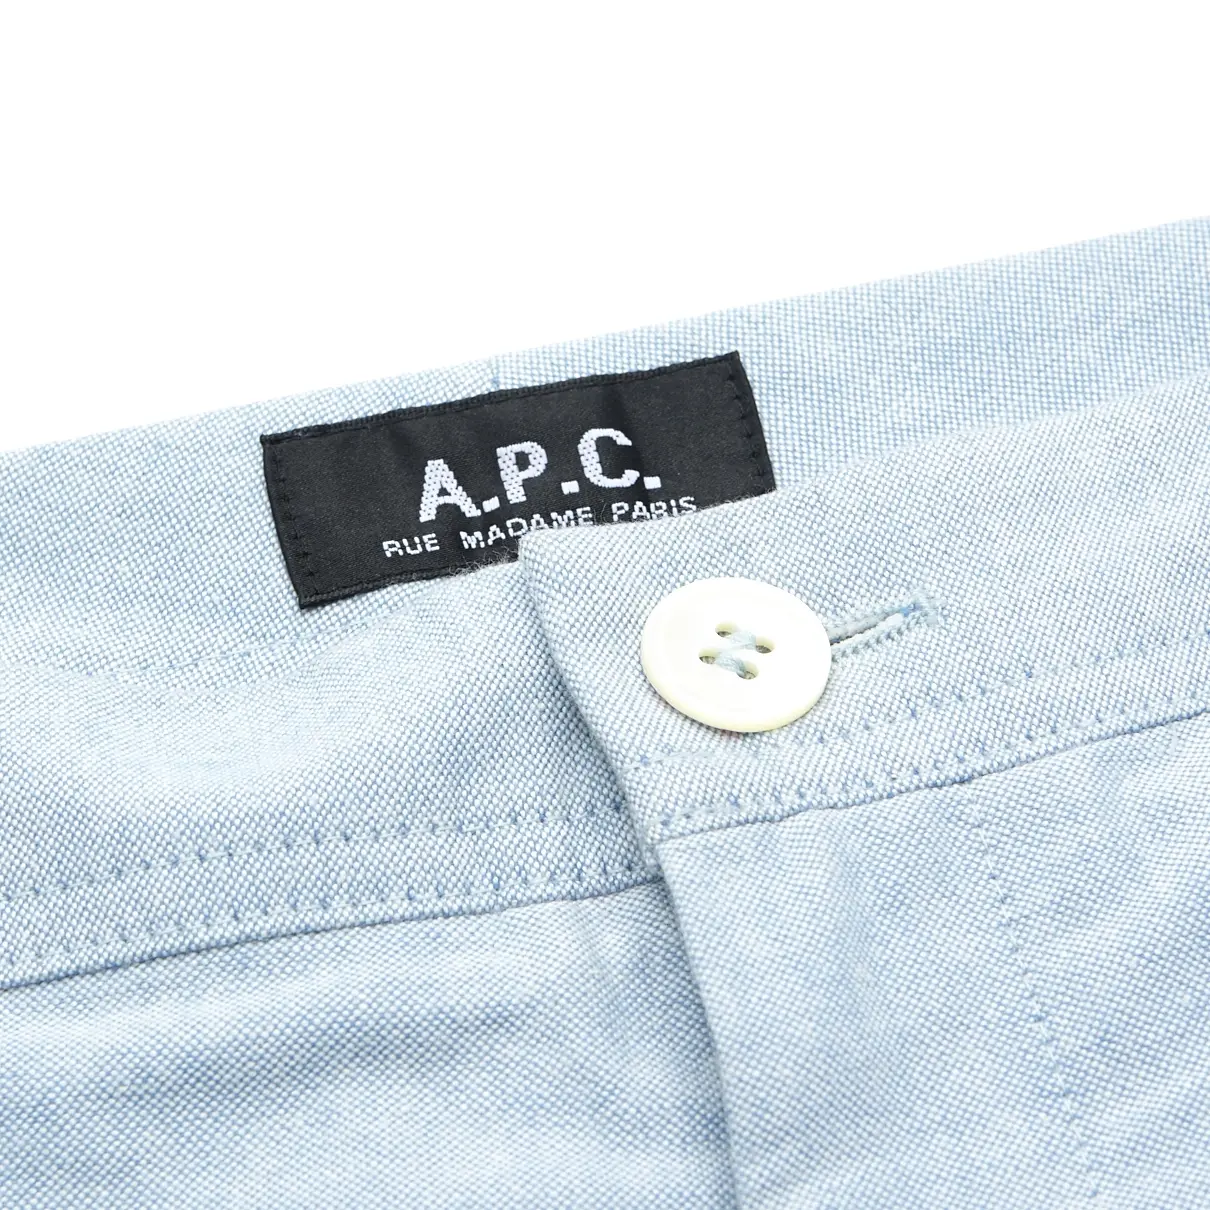 Buy APC Pants online